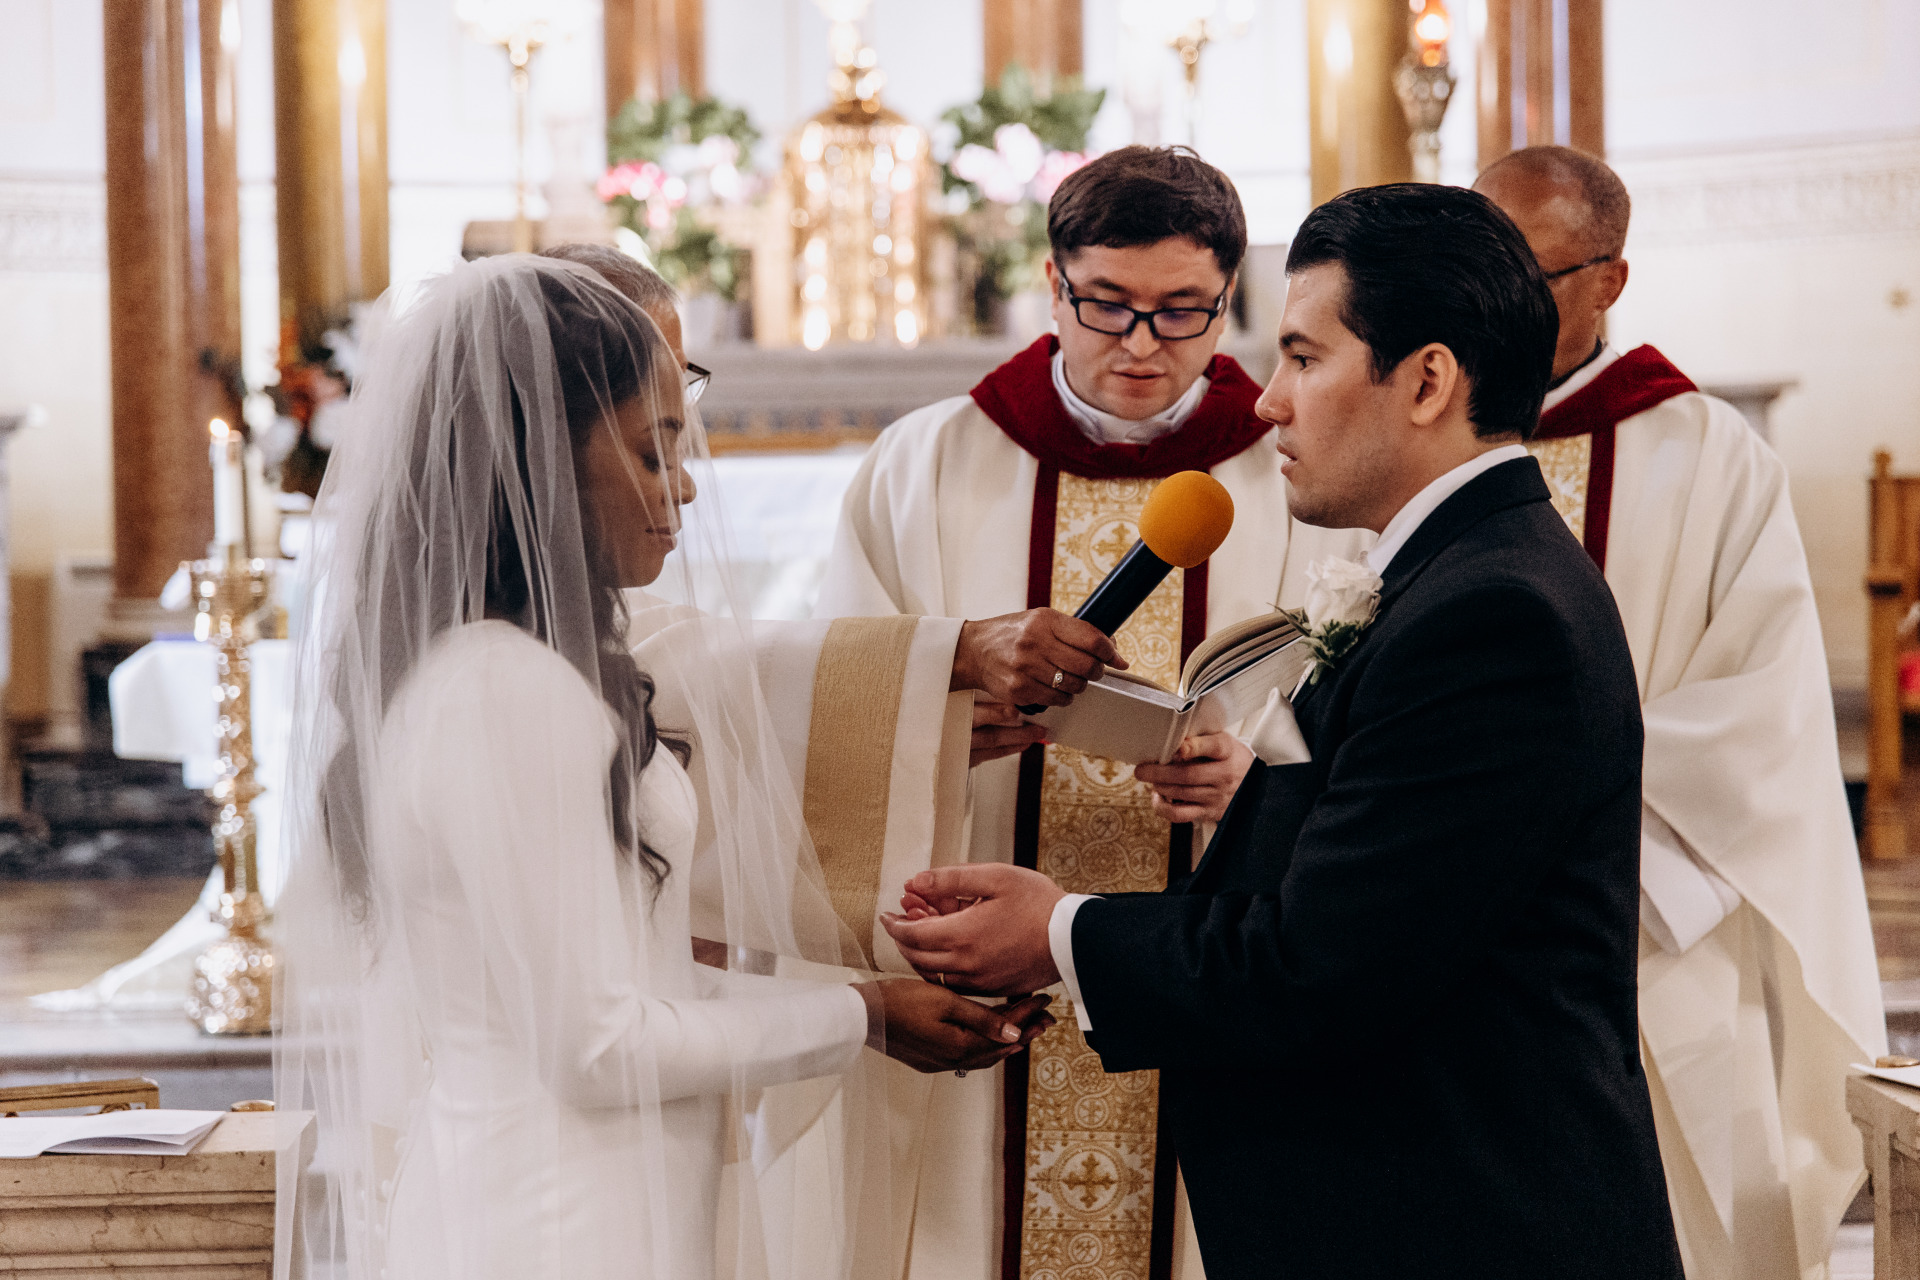 Catholic ceremony wedding in Jersey City New Jersey 22